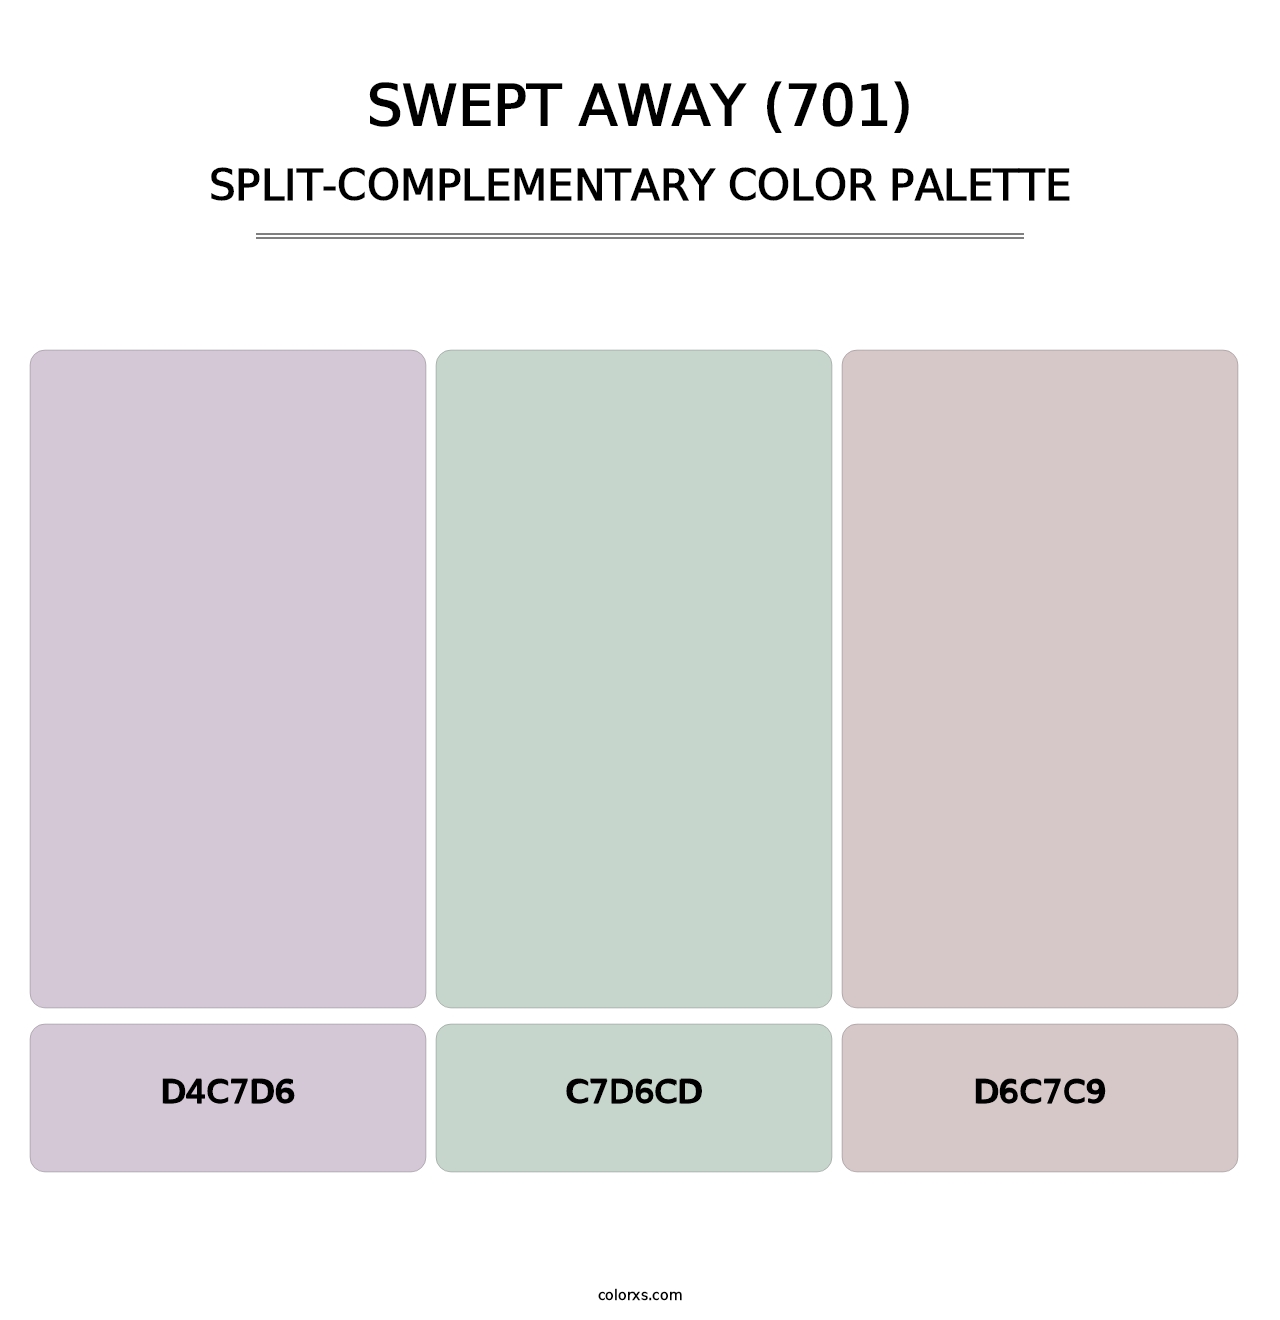 Swept Away (701) - Split-Complementary Color Palette